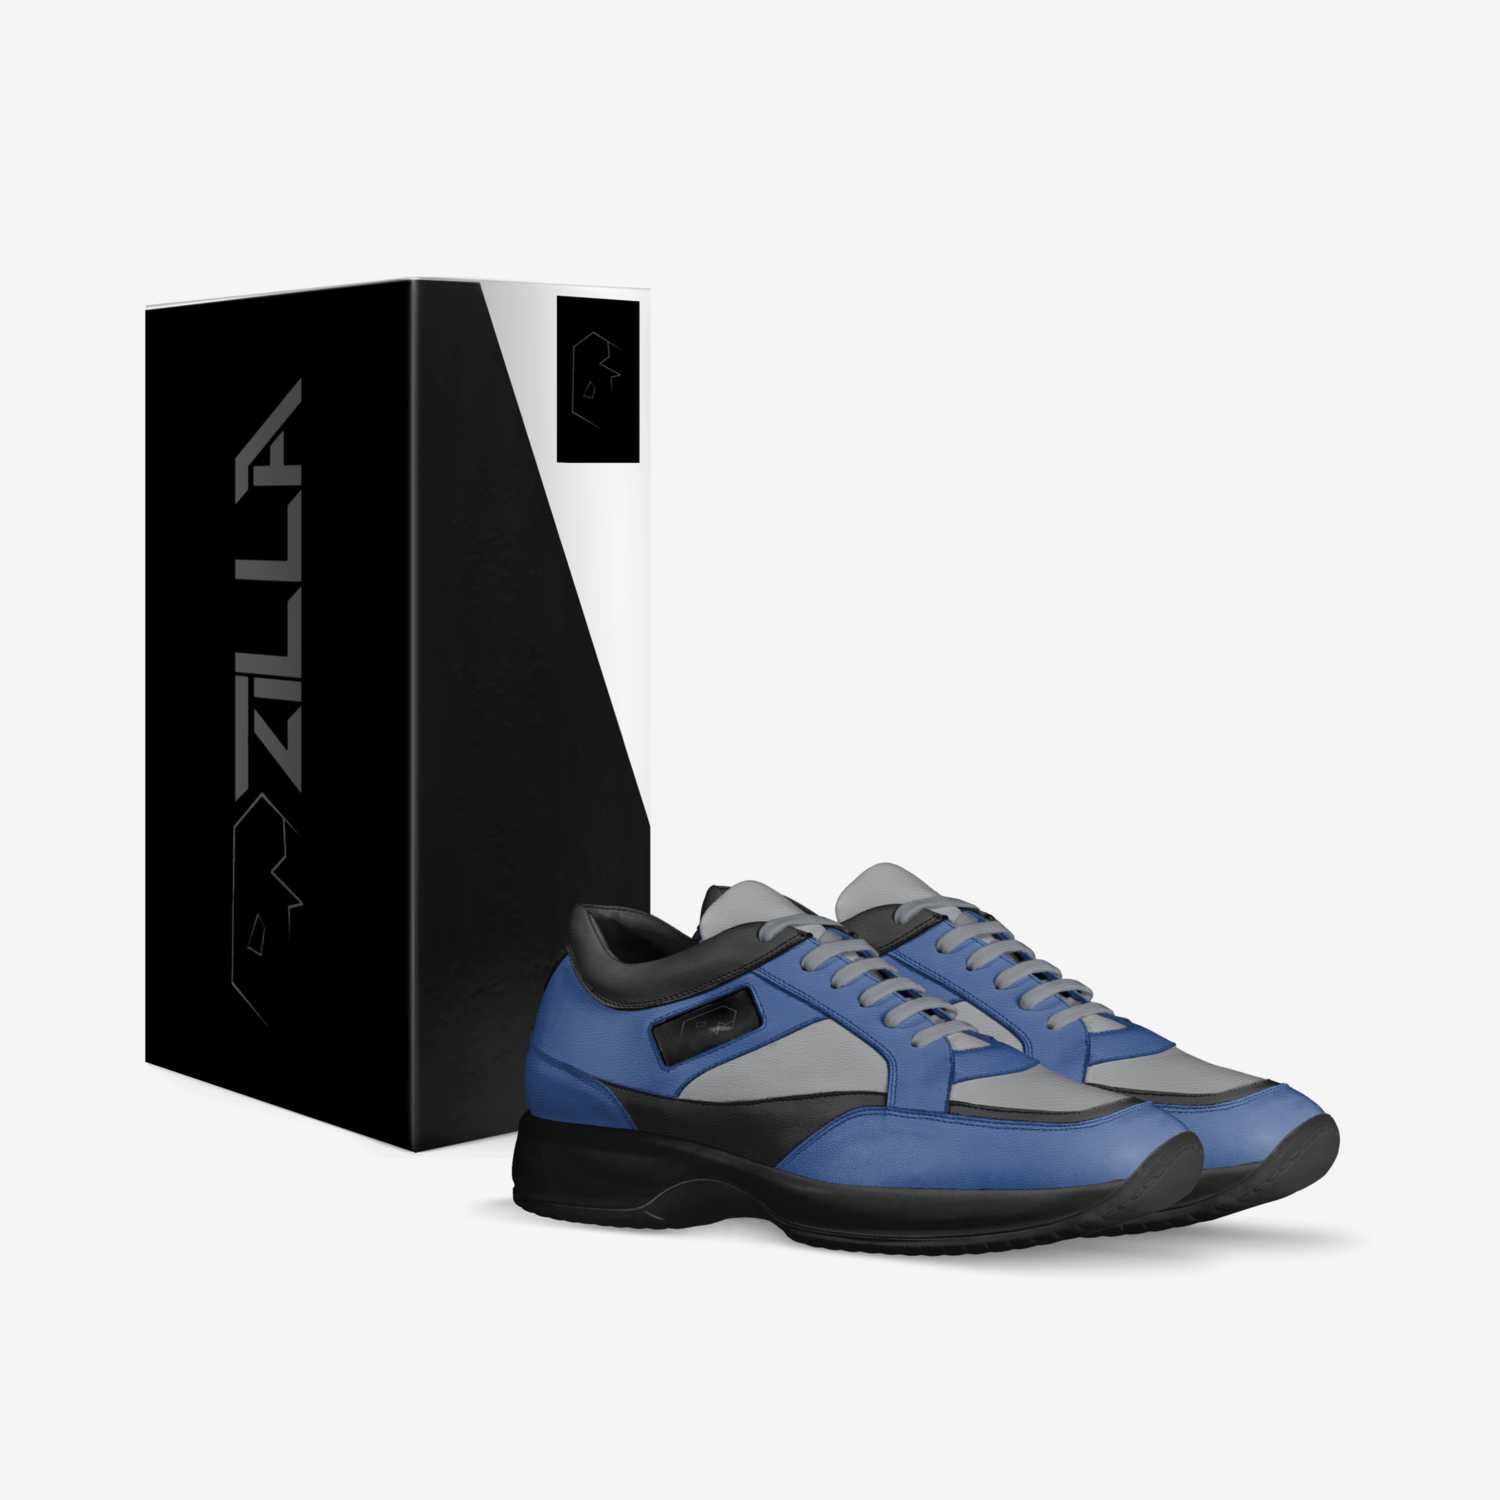 Mark 1 custom made in Italy shoes by Kody Hoyle | Box view